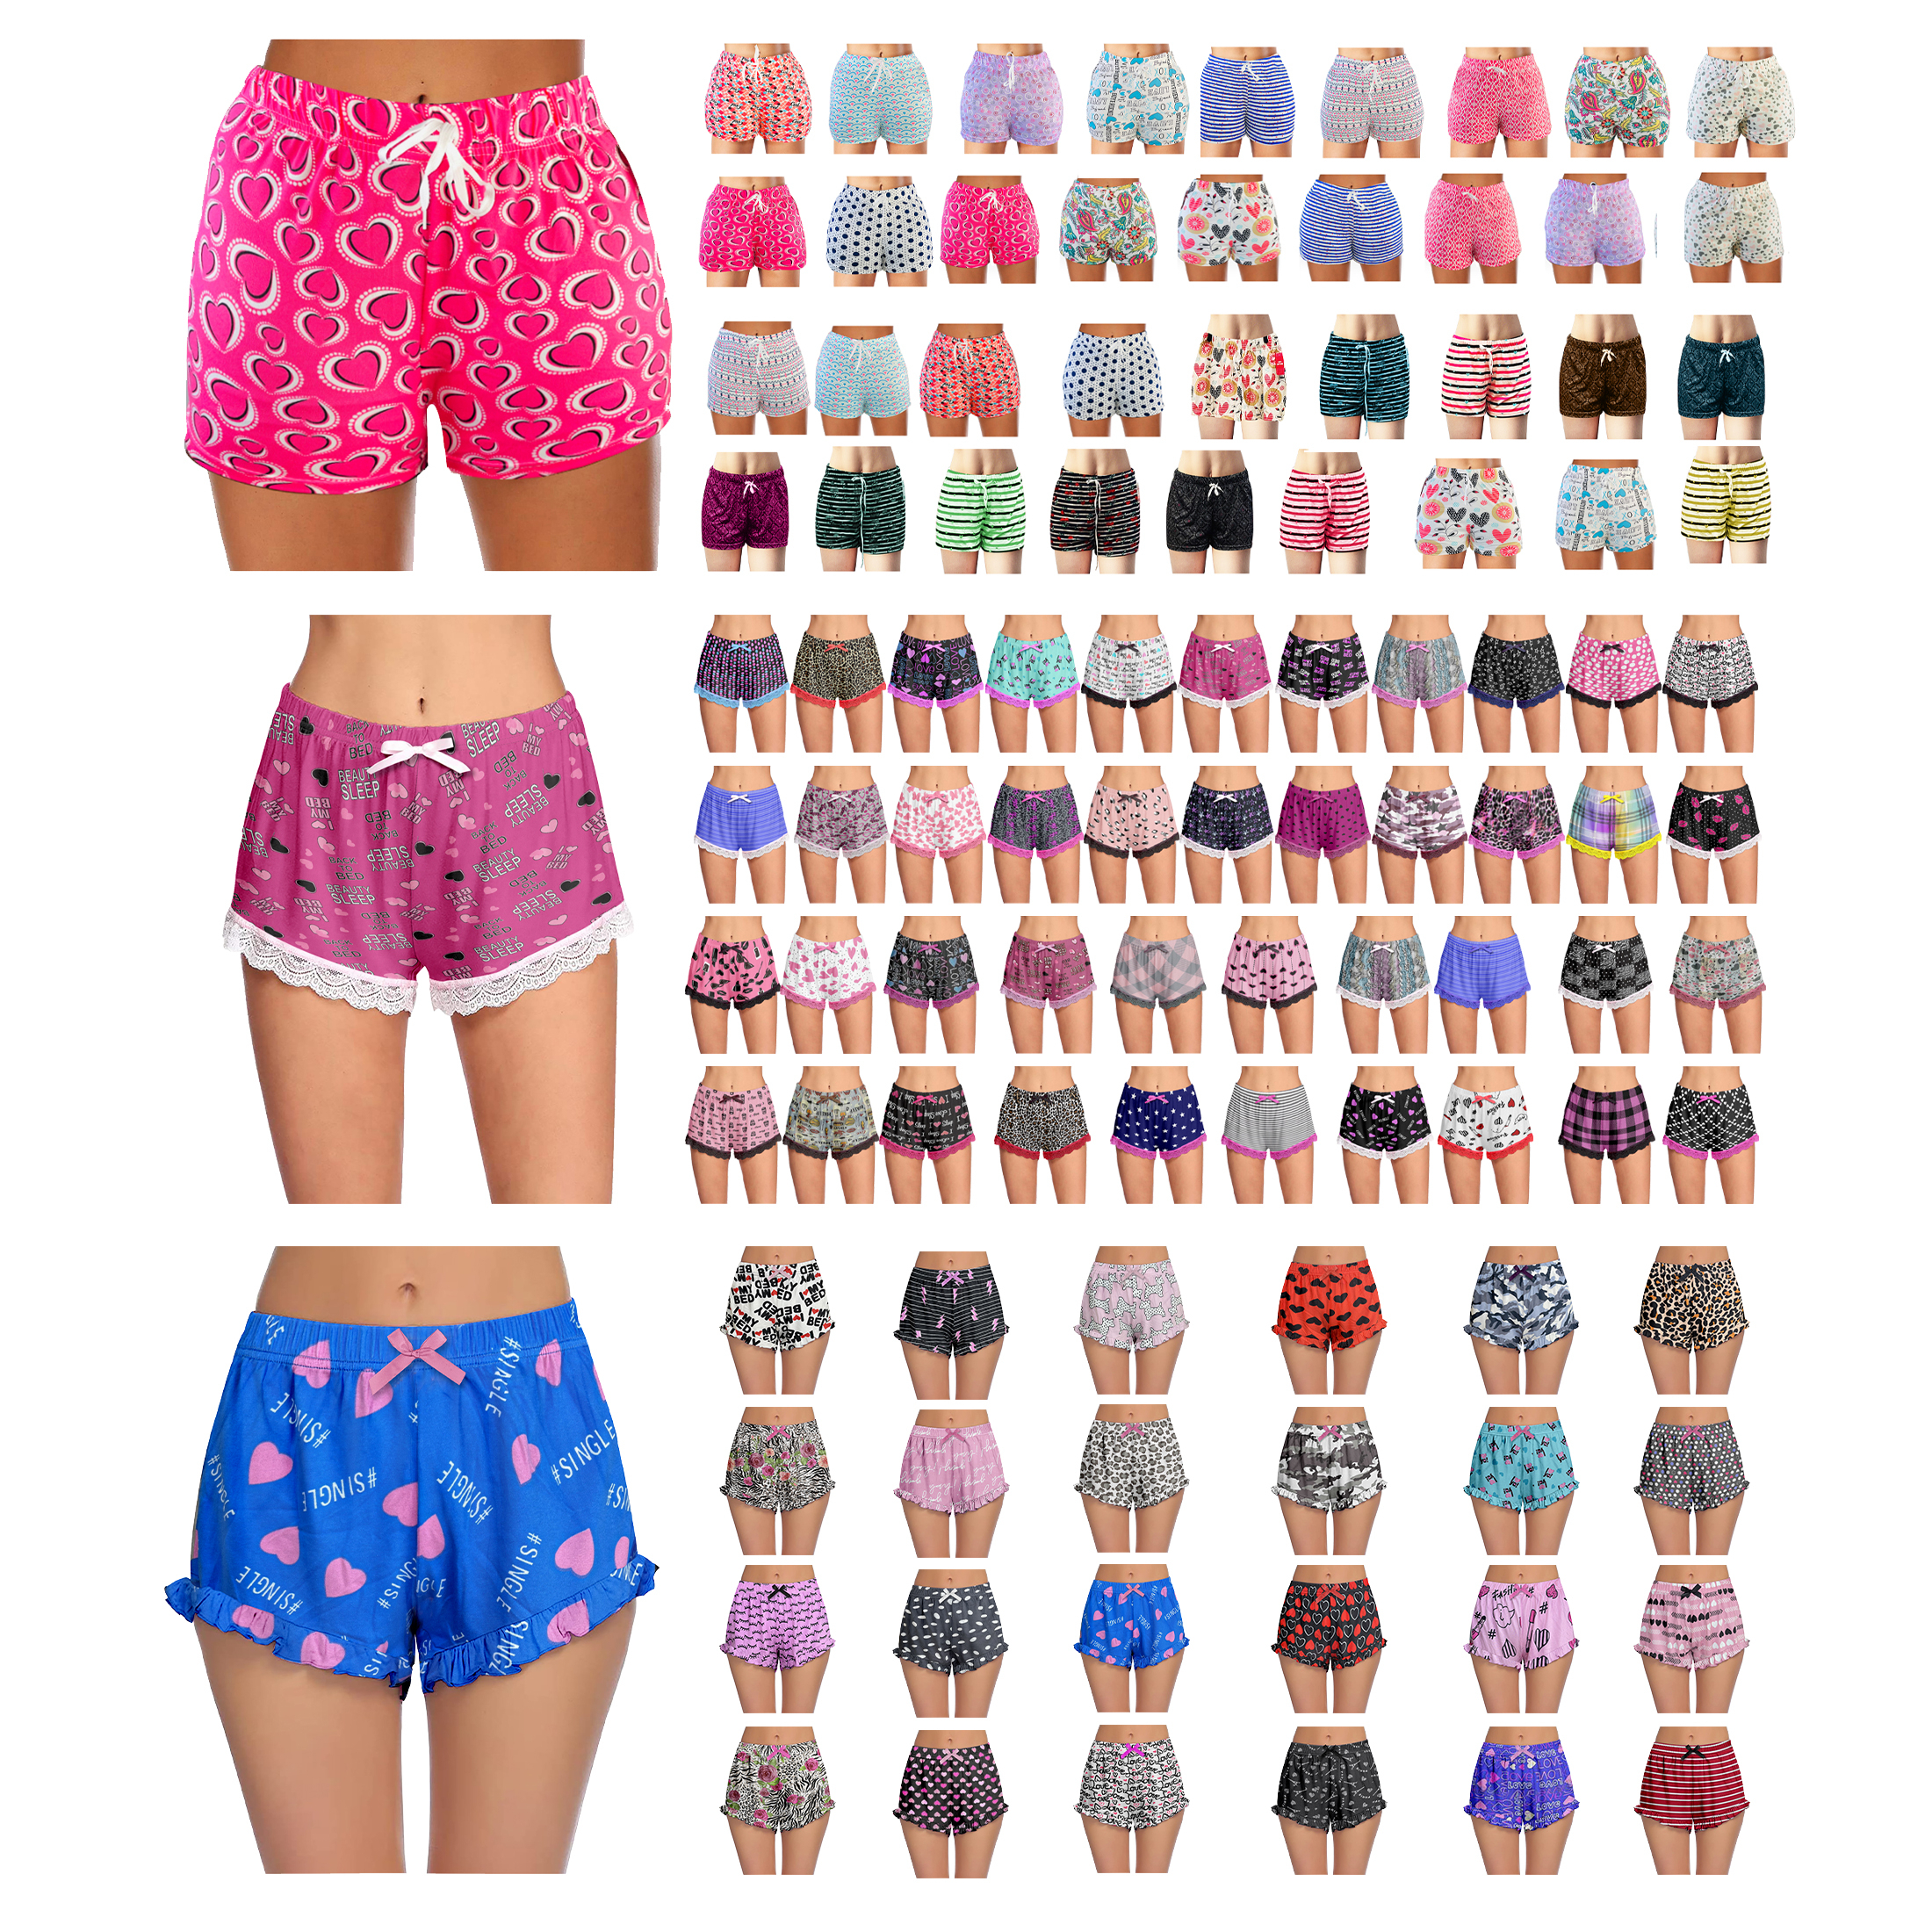 3-Pack: Women's Soft Comfy Printed Lounge Sleep Pajama Shorts - Laced Hem, Medium